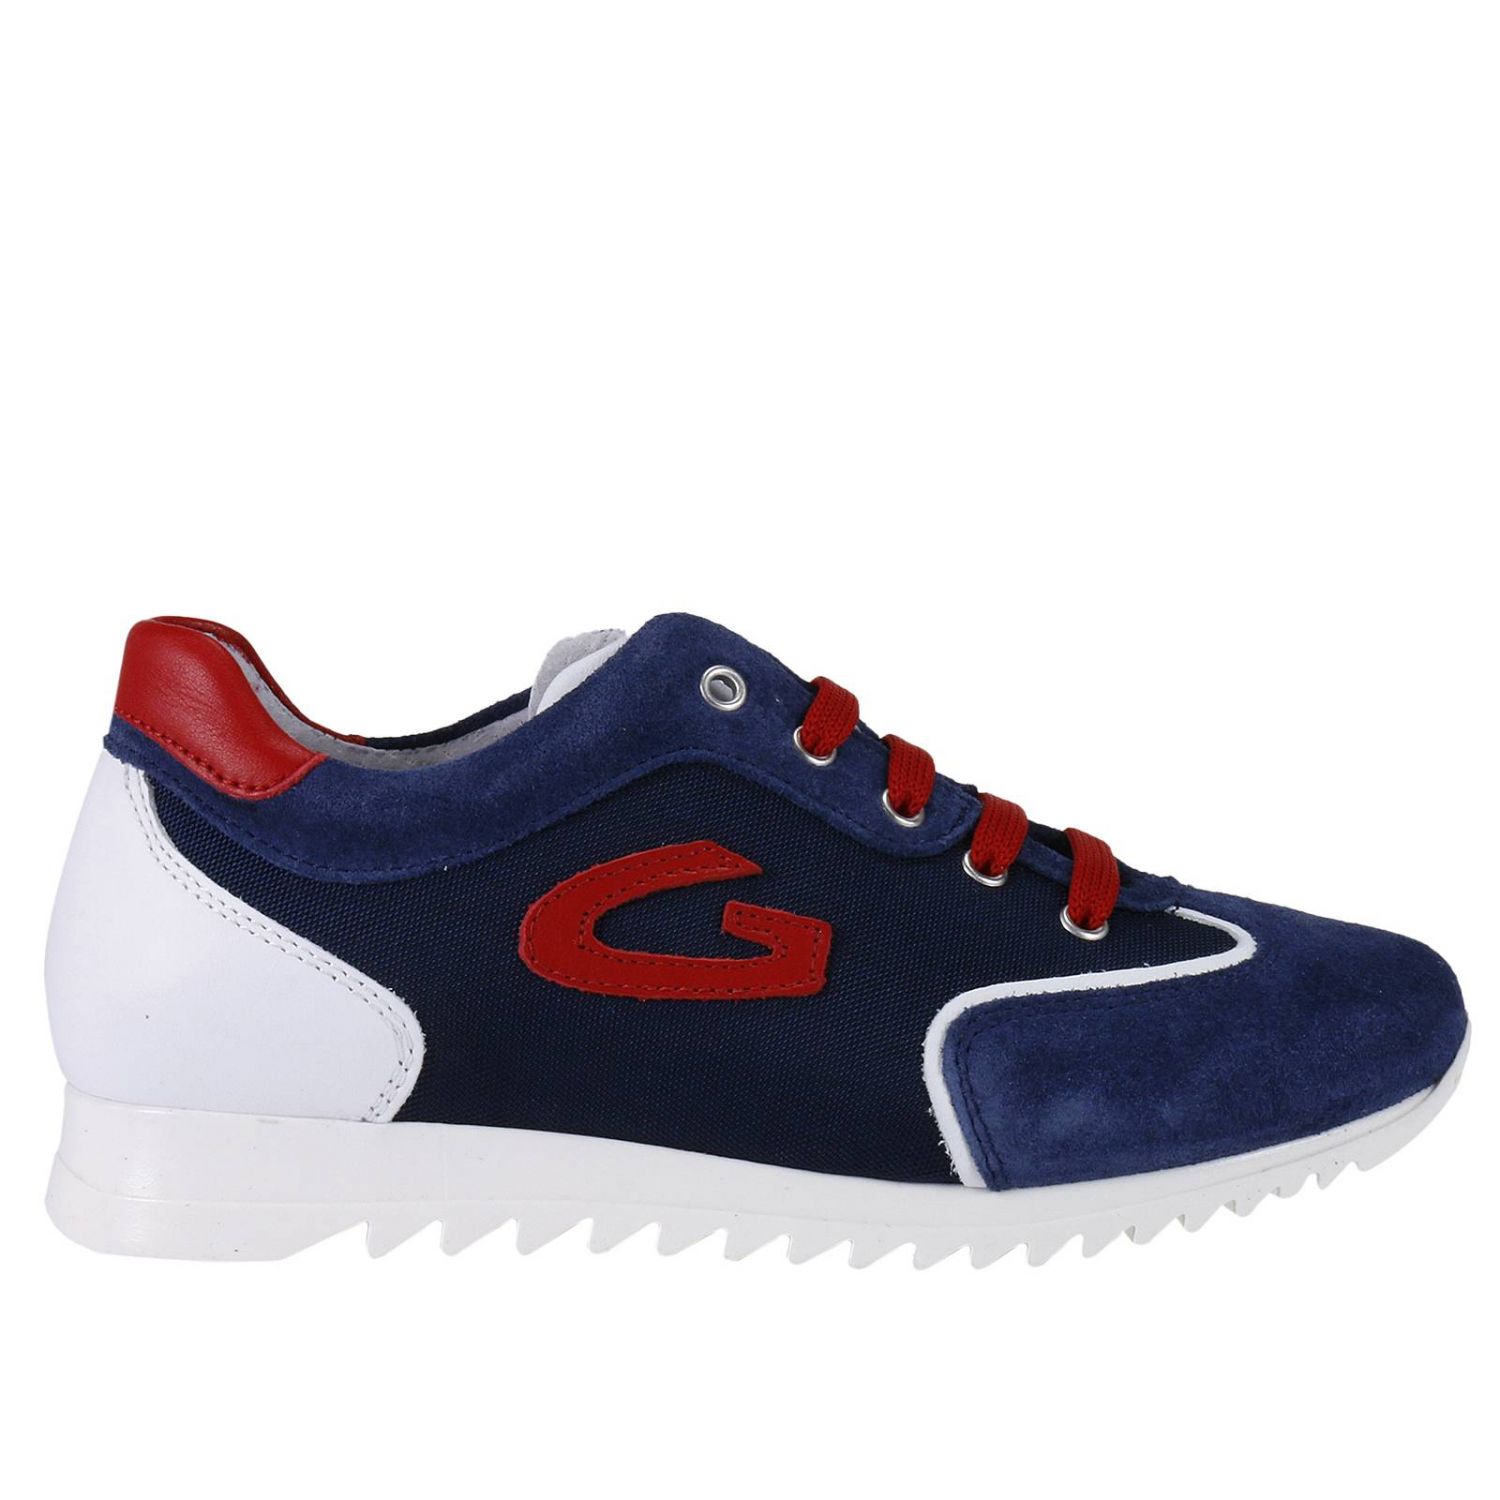 guardiani shoes